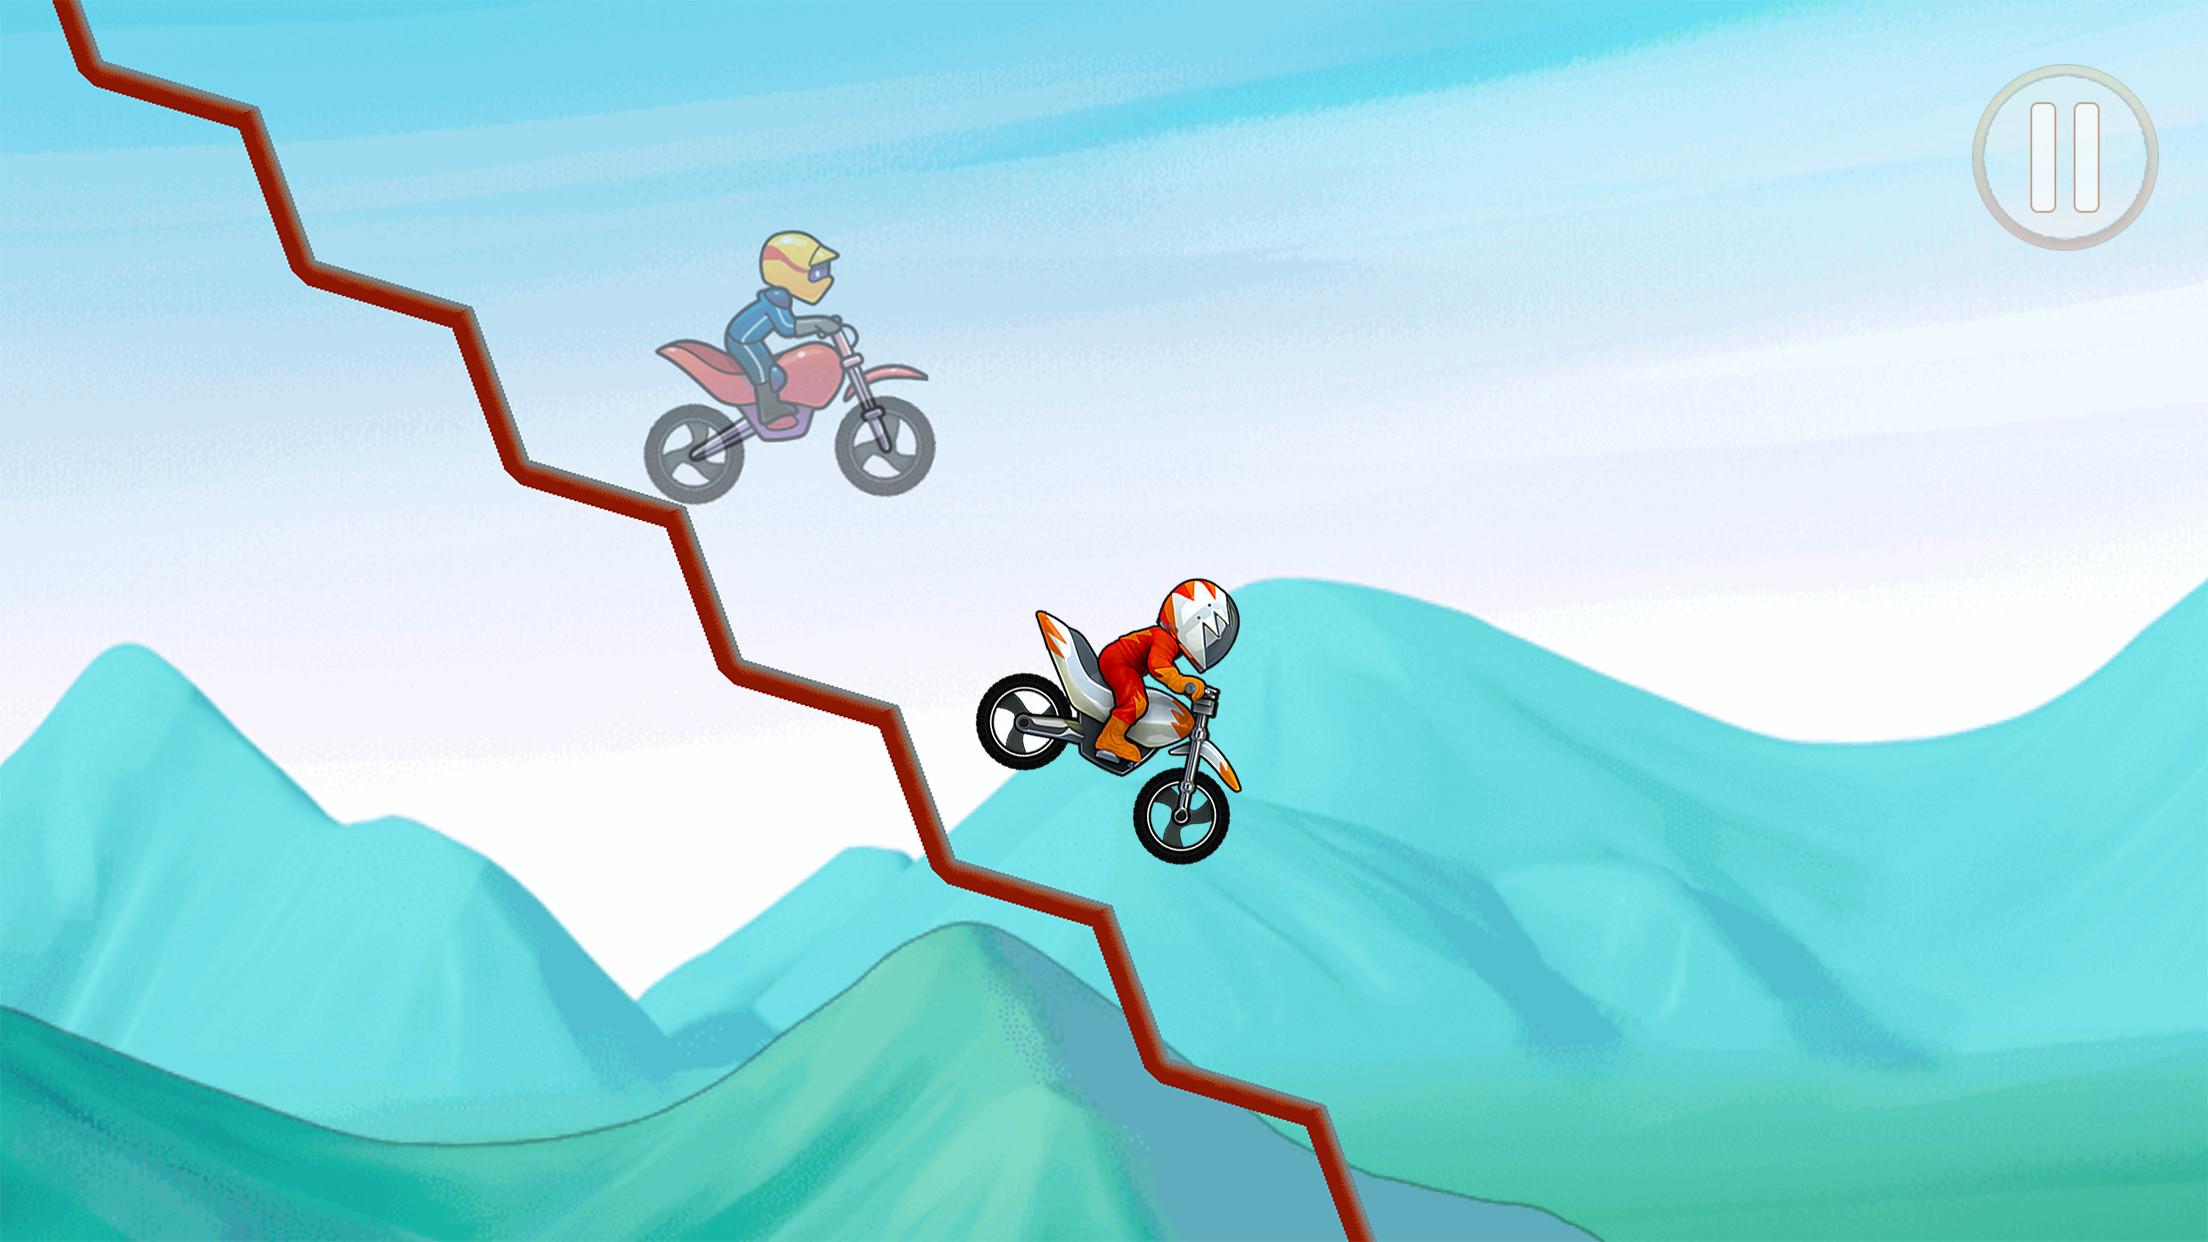 Bike race racing game. Bike Racing игра. Гонки на мотоциклах по горам. Игра на мотоцикле по горам. Игра про мотоцикл на Горках.